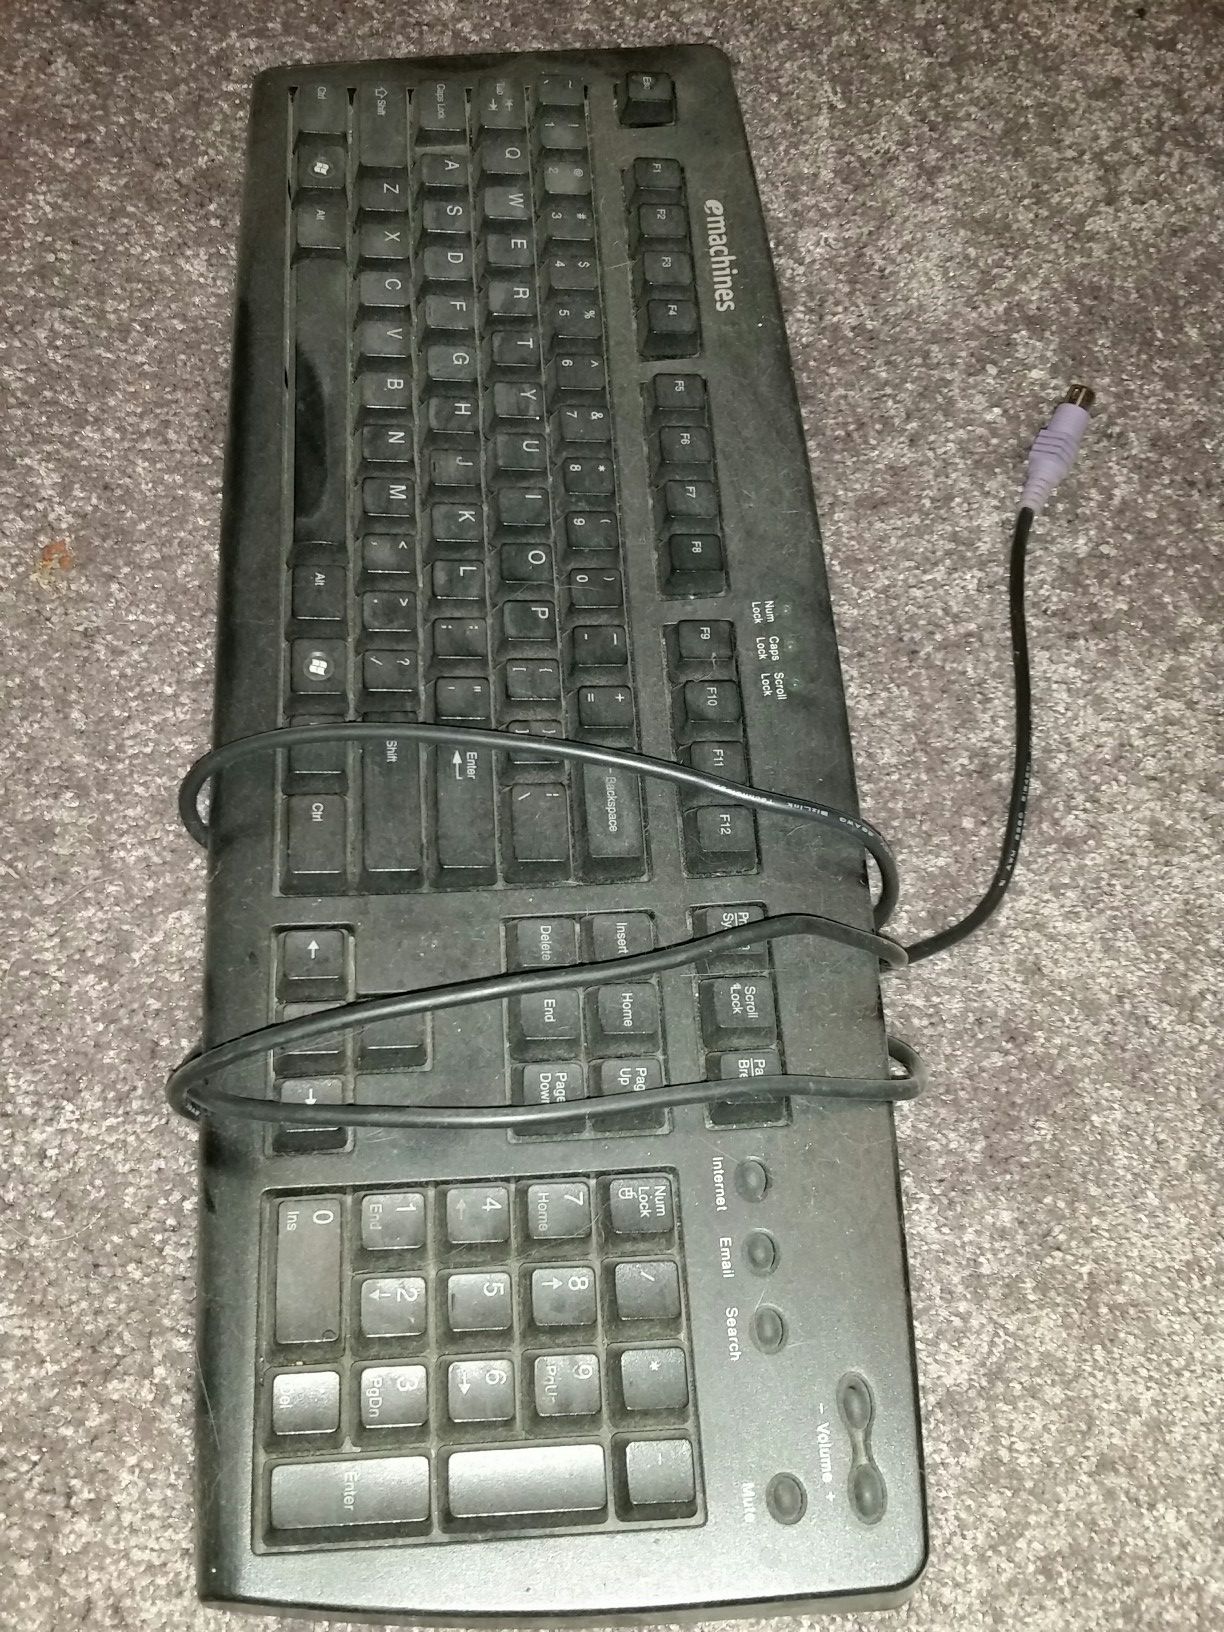 EMachines keyboard